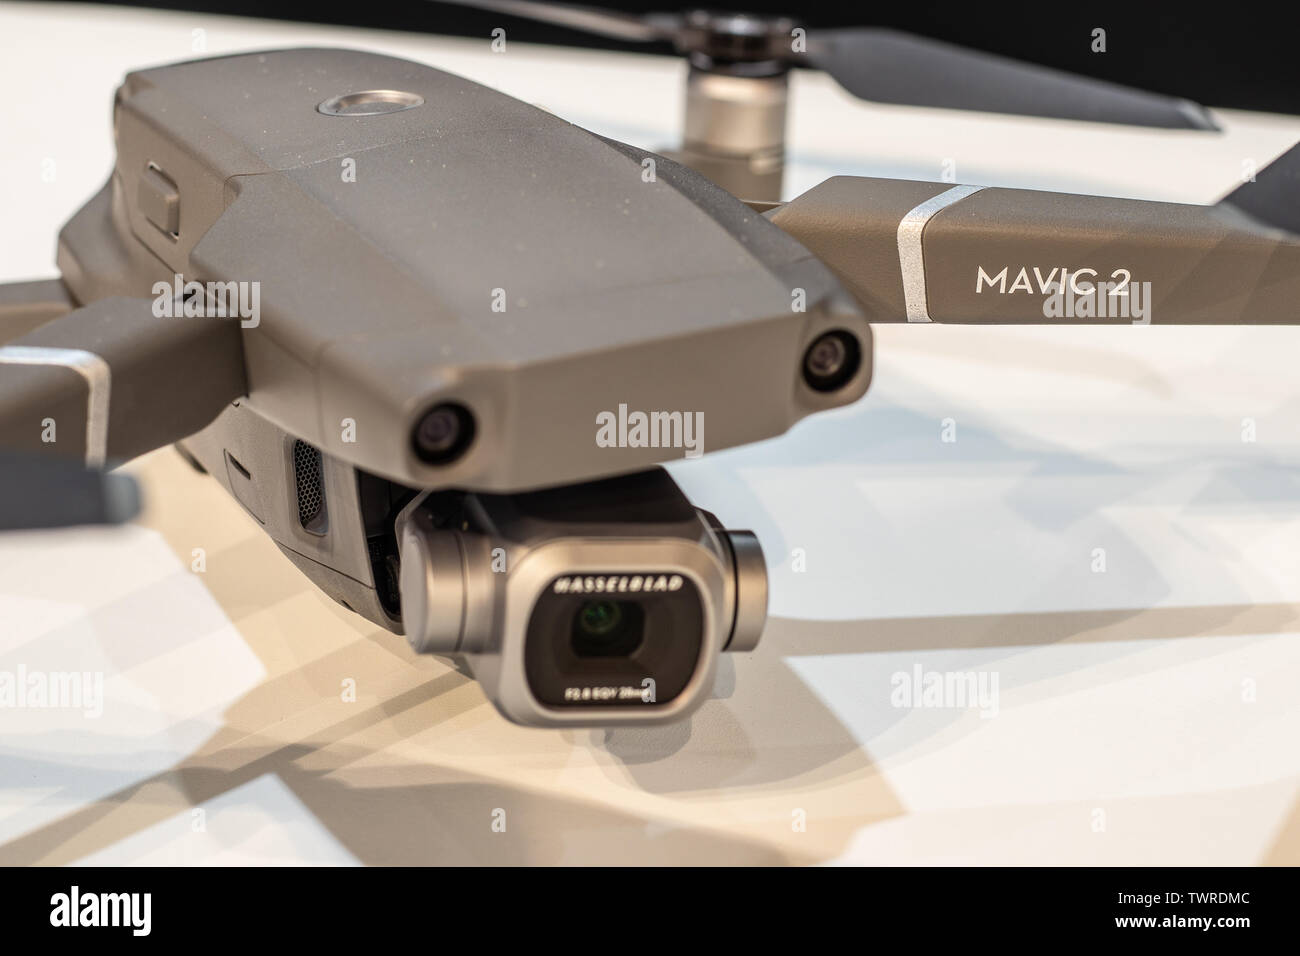 Berlin, Deutschland, 29. August 2018 DJI Drohnen Mavic2 Pro Hasselblad lens, Unmanned Aerial Vehicle, UAV, DJI Ausstellung, globale Innovationen zeigen IFA 2018 Stockfoto